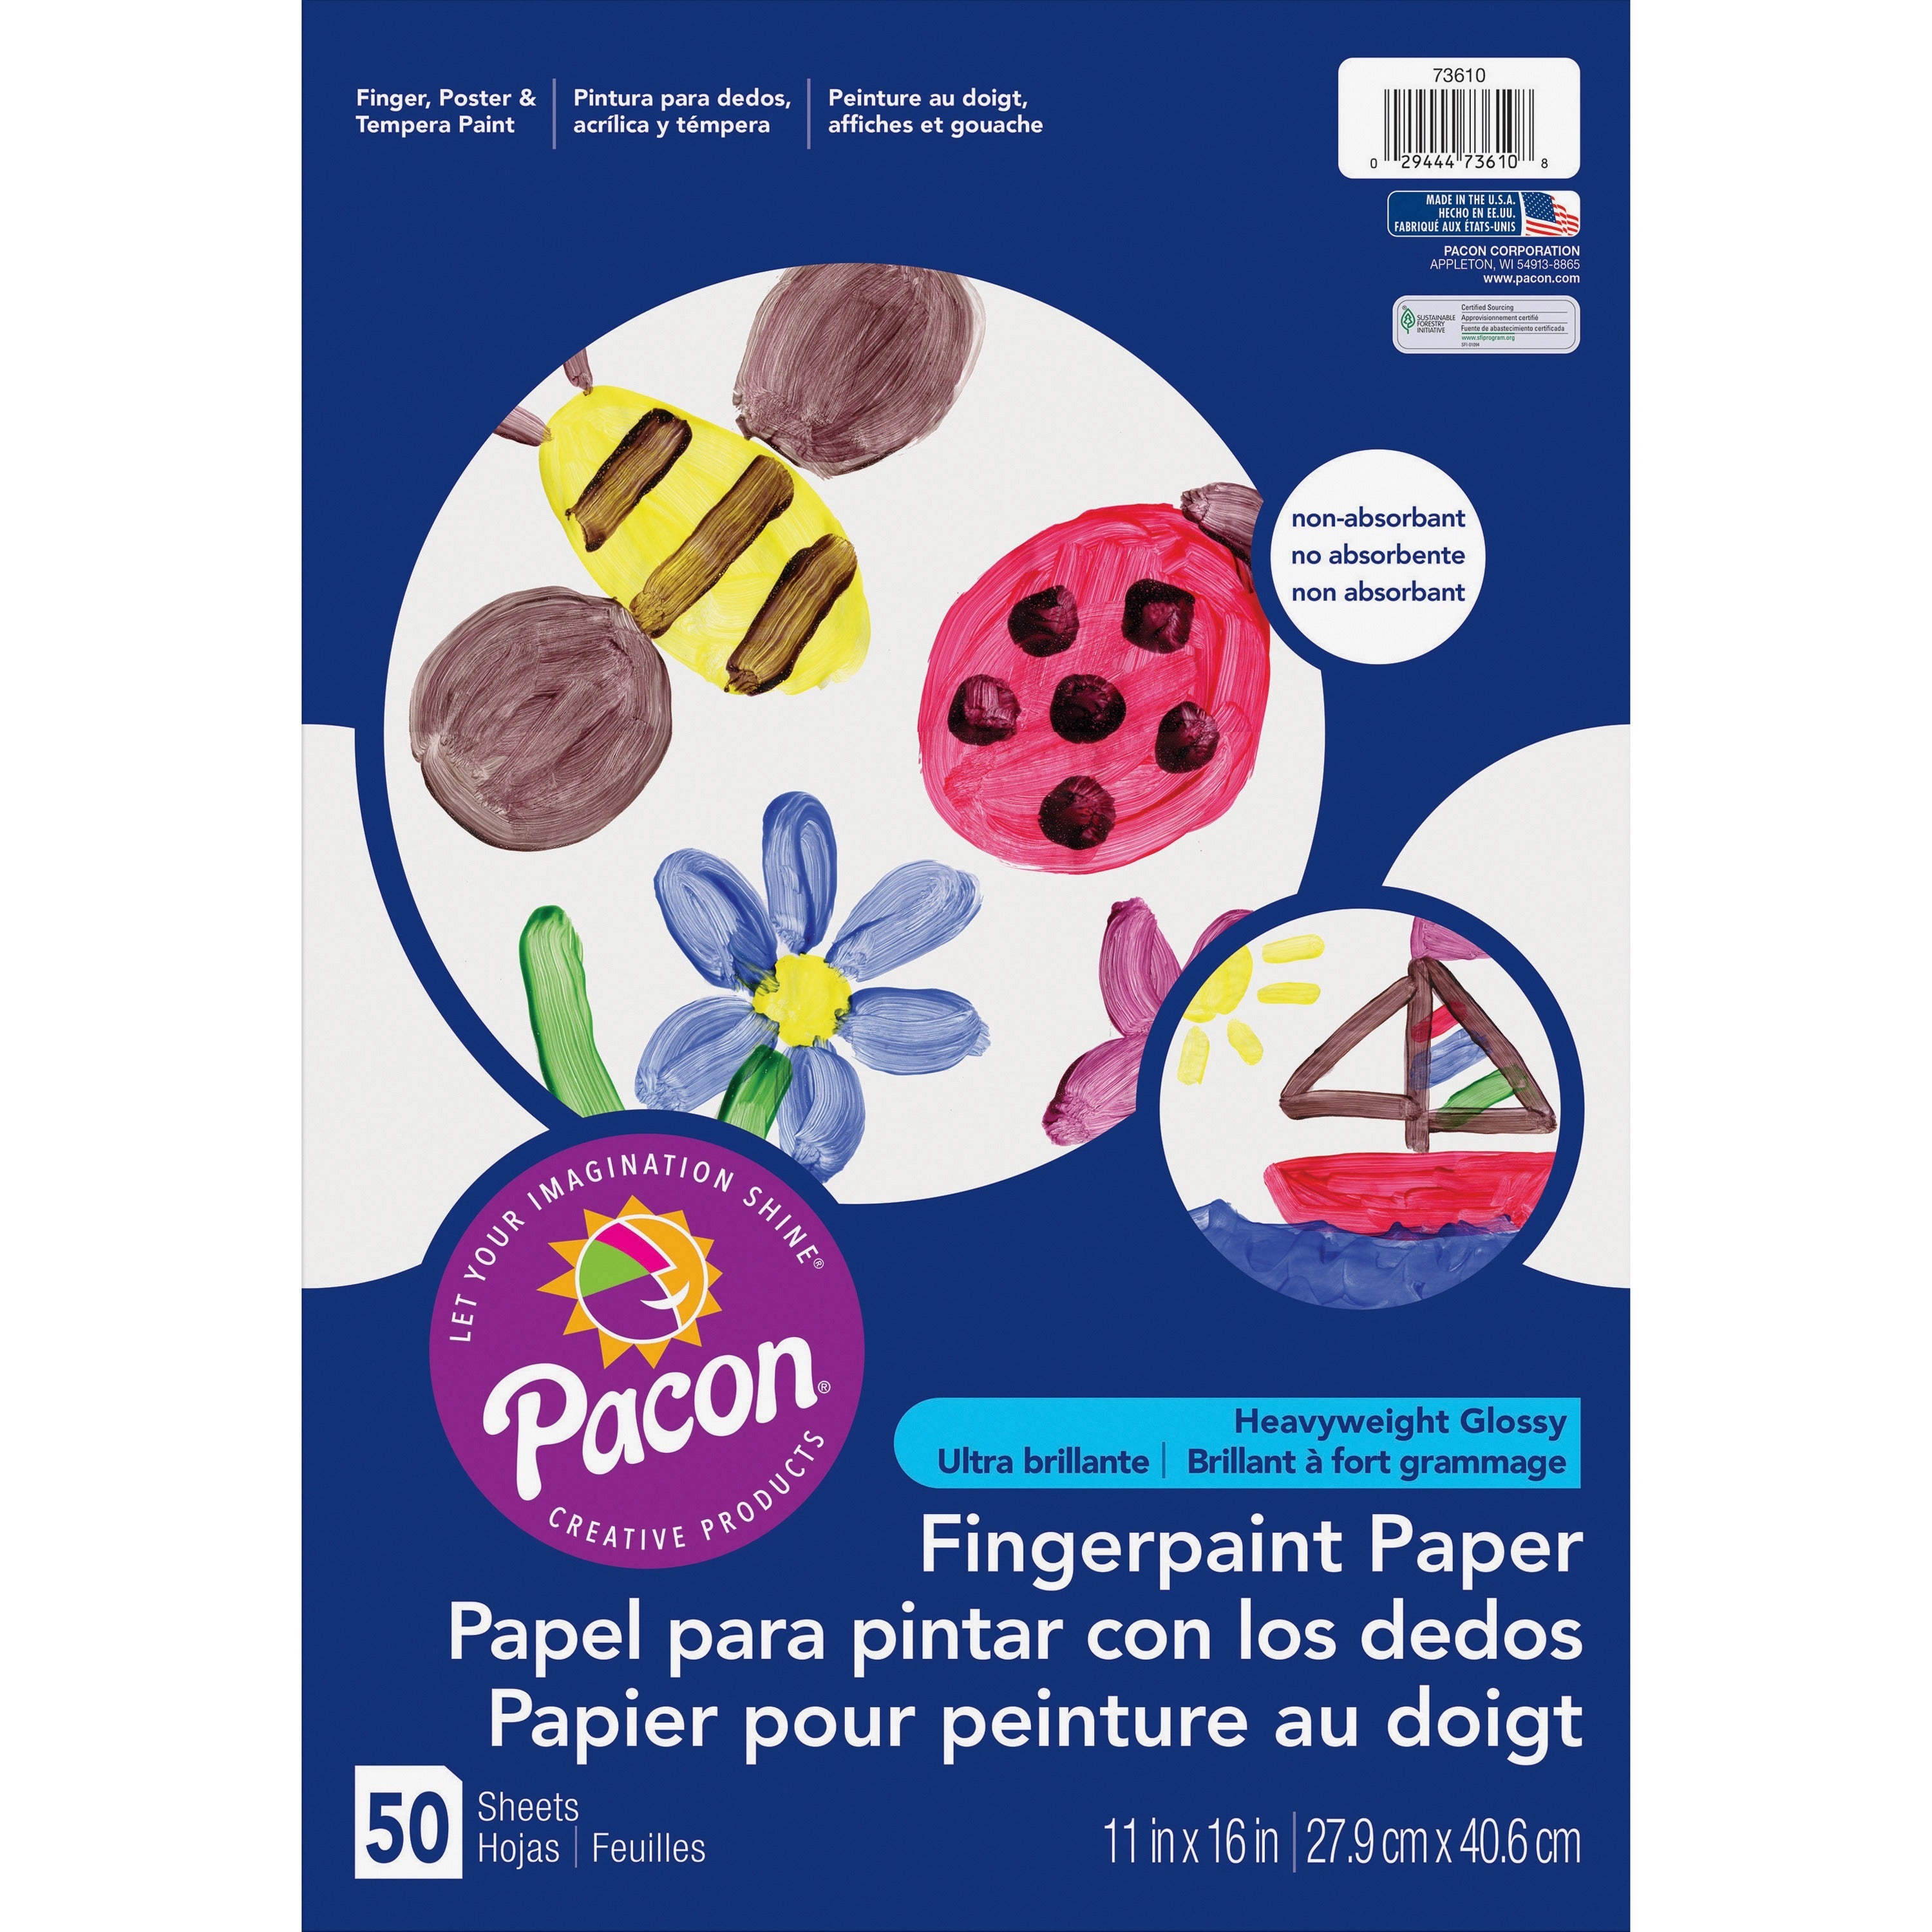 pacon-fingerpaint-paper-50-sheets-11-x-16-white-paper-non-absorbant-bleed-resistant-smear-resistant-1-pack_pac73610 - 1